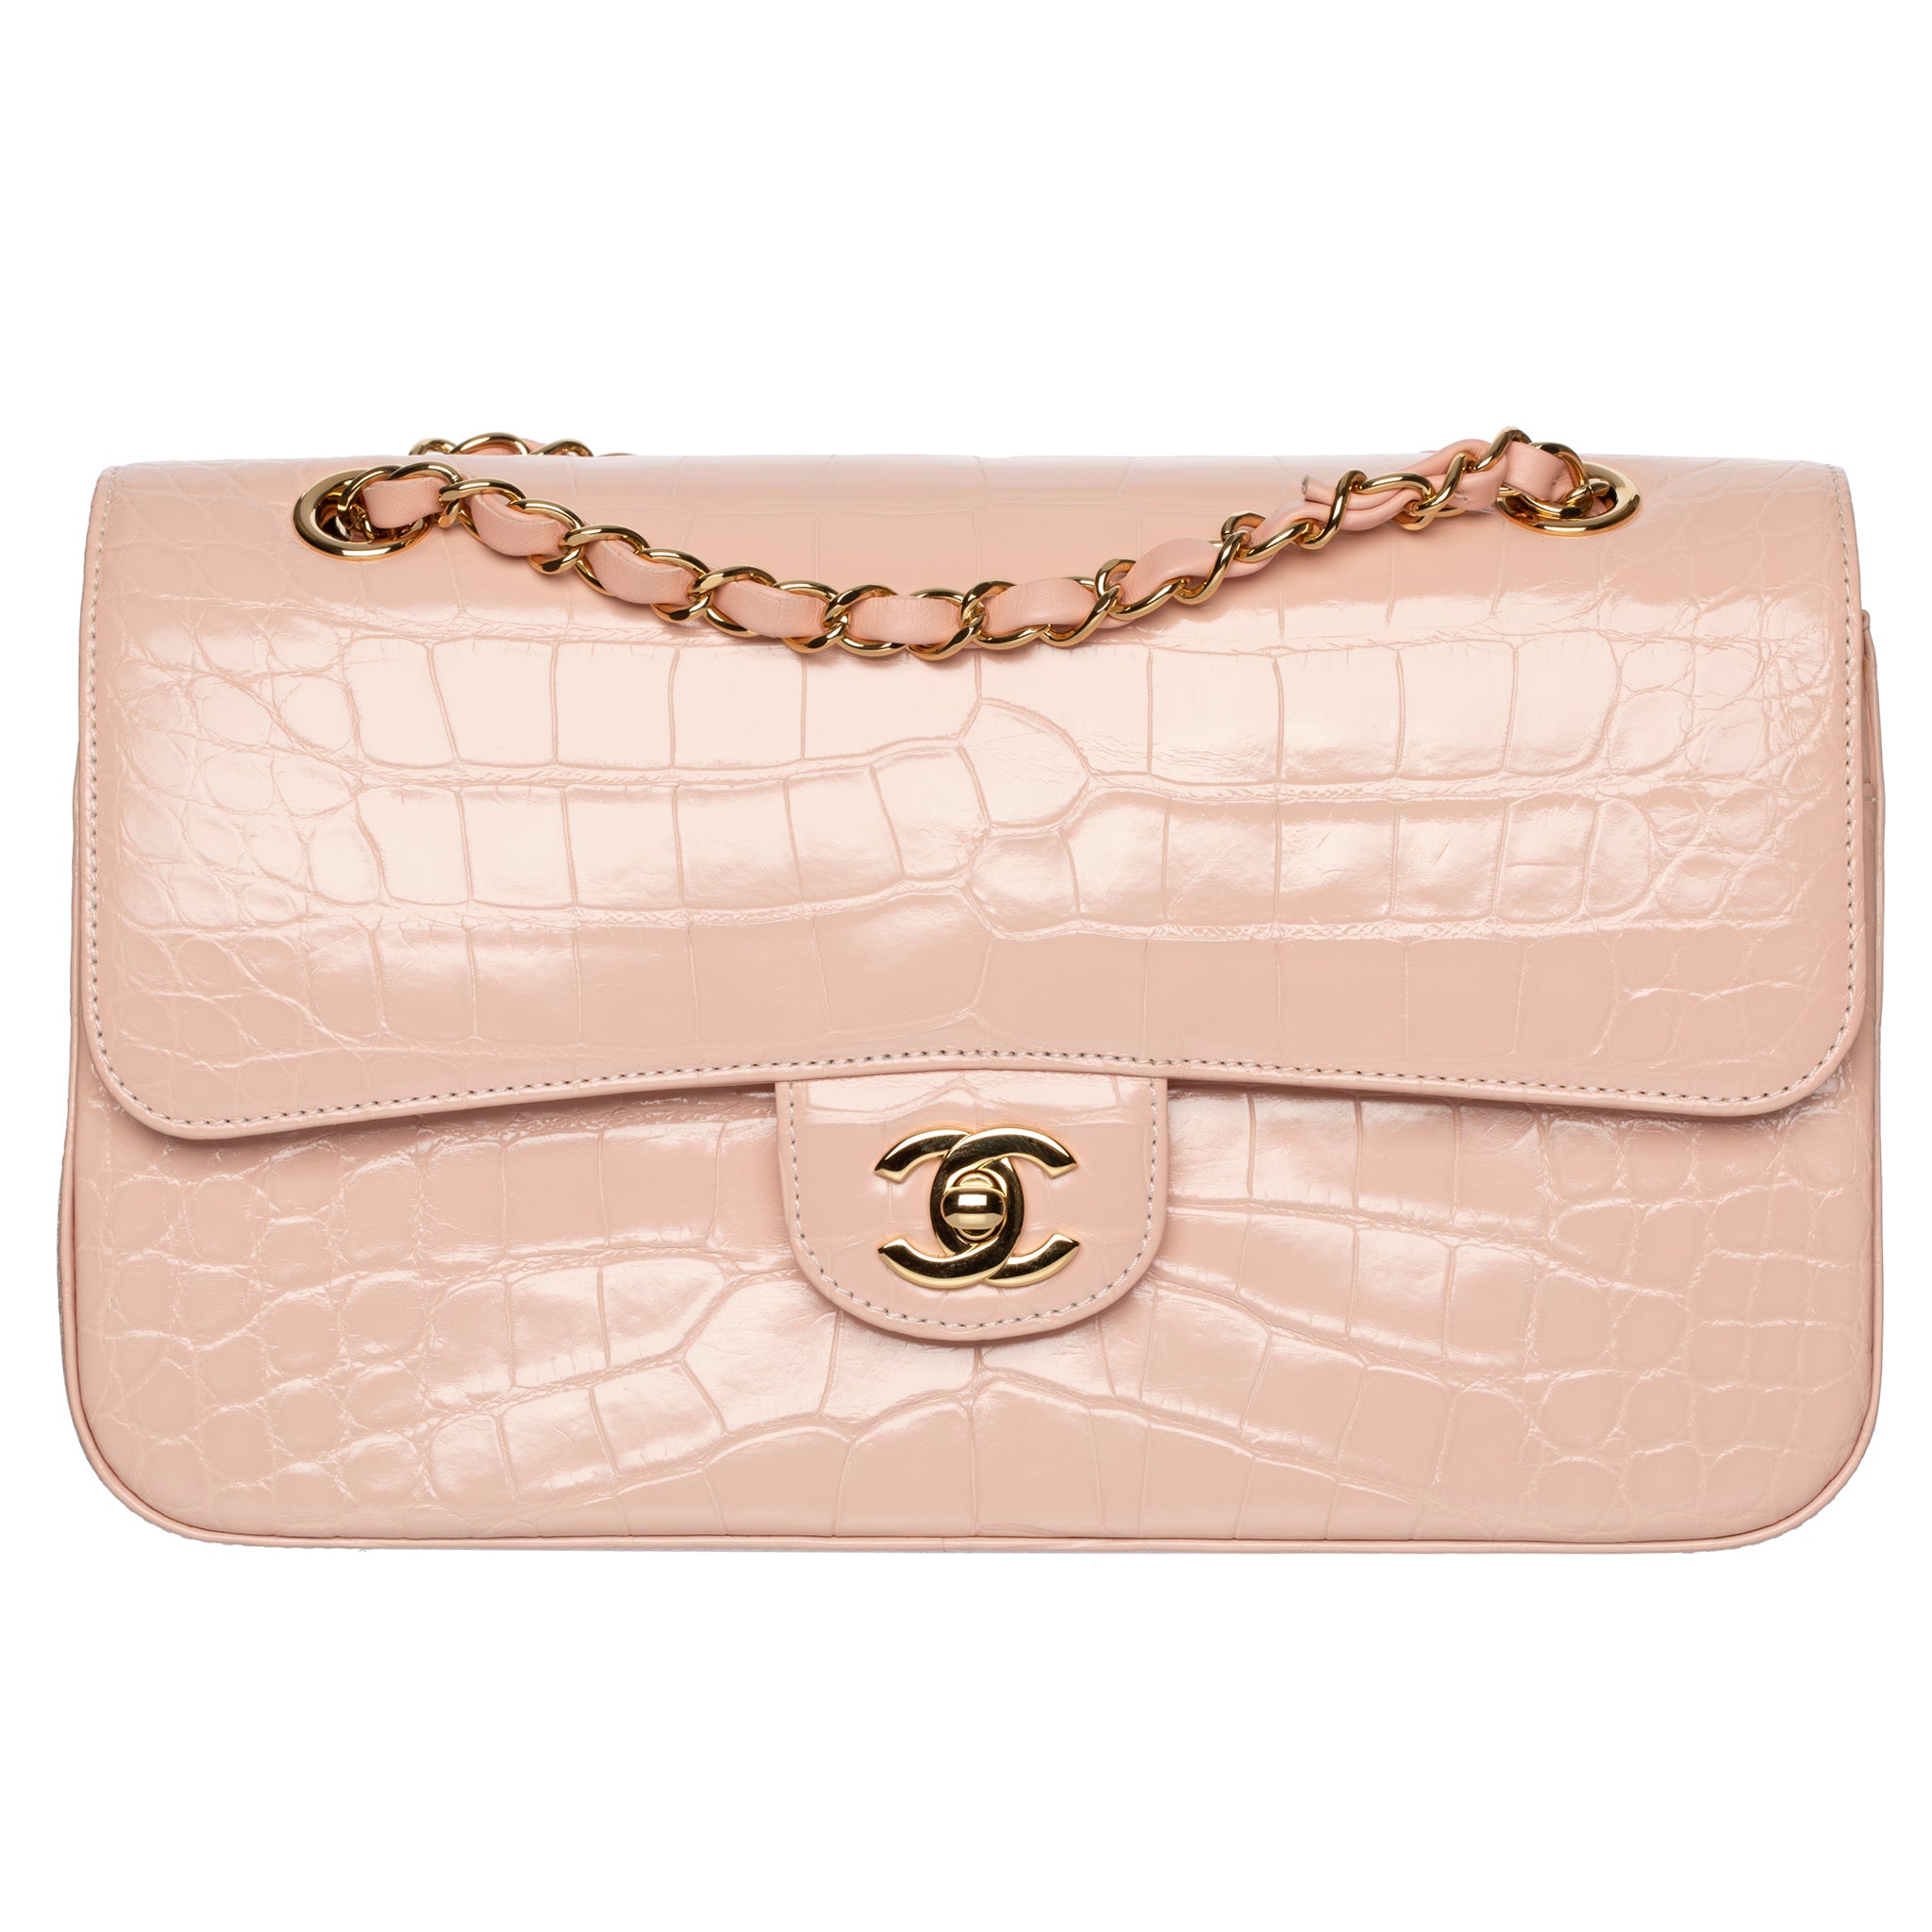 Chanel Medium Double Classic Flap Bag Pale Pink Crocodile Leather Gold Tone Hardware